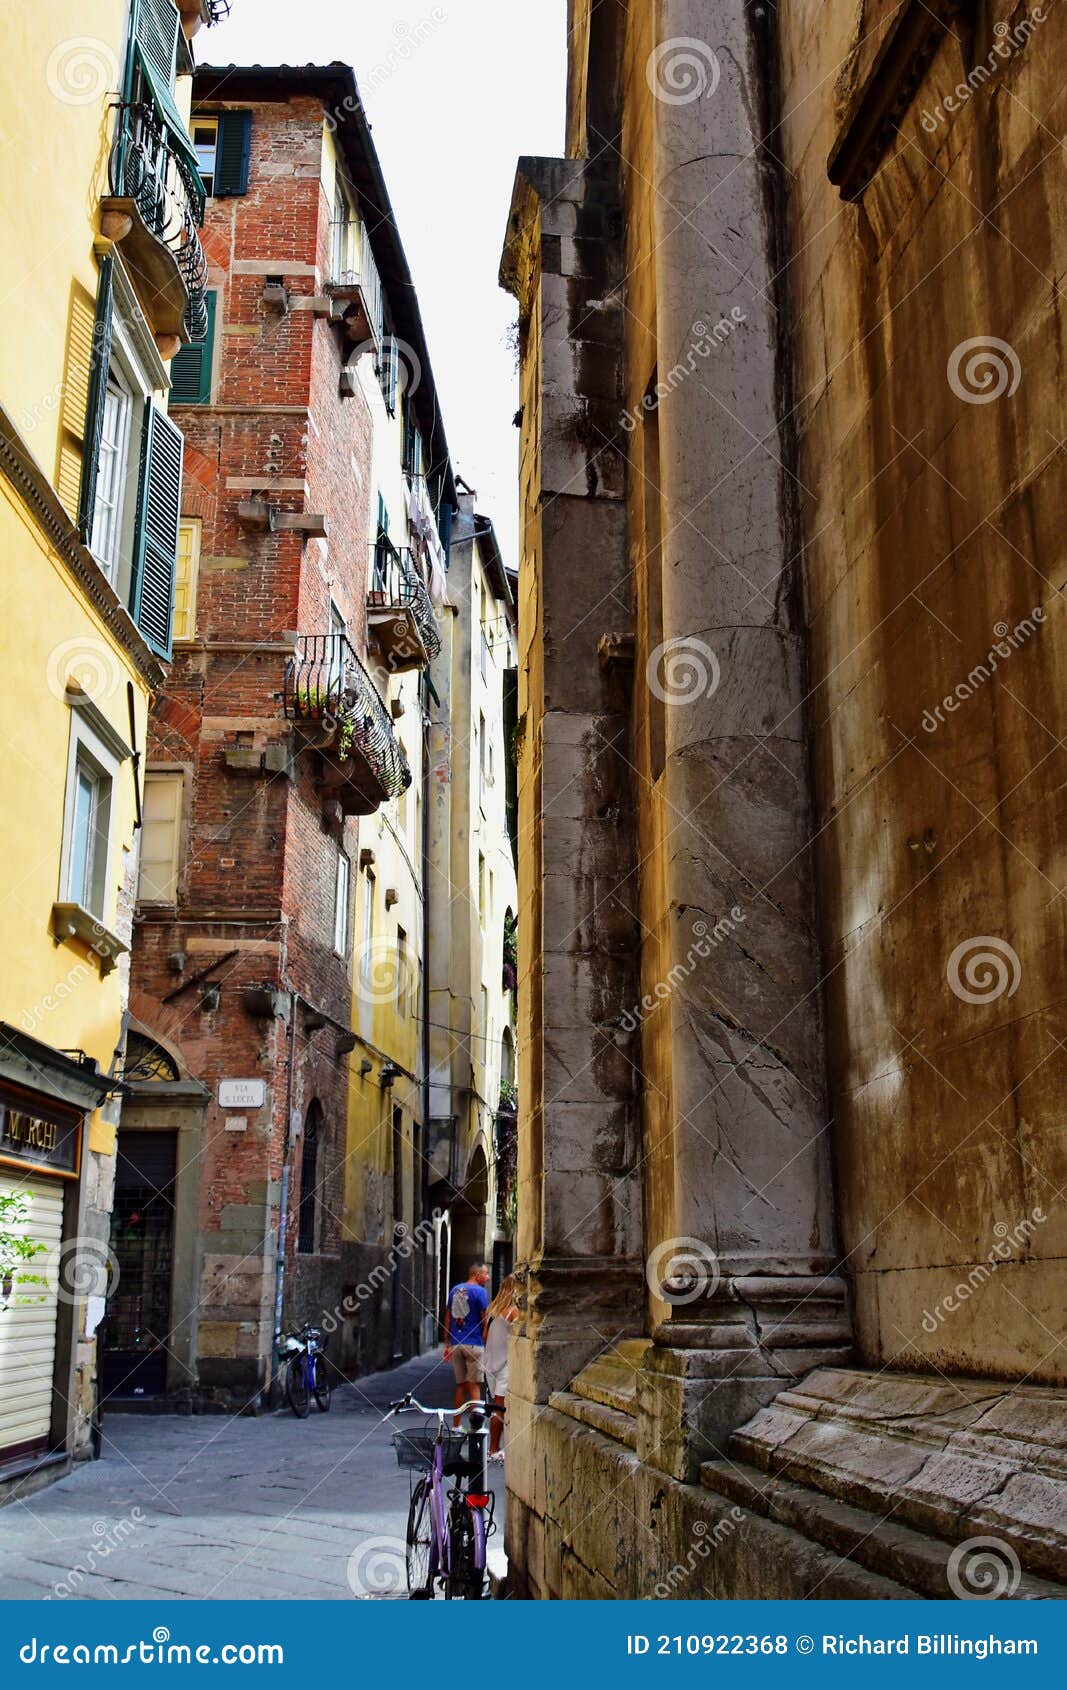 historic buildings on narrow strret, lucca, tuscany, italy